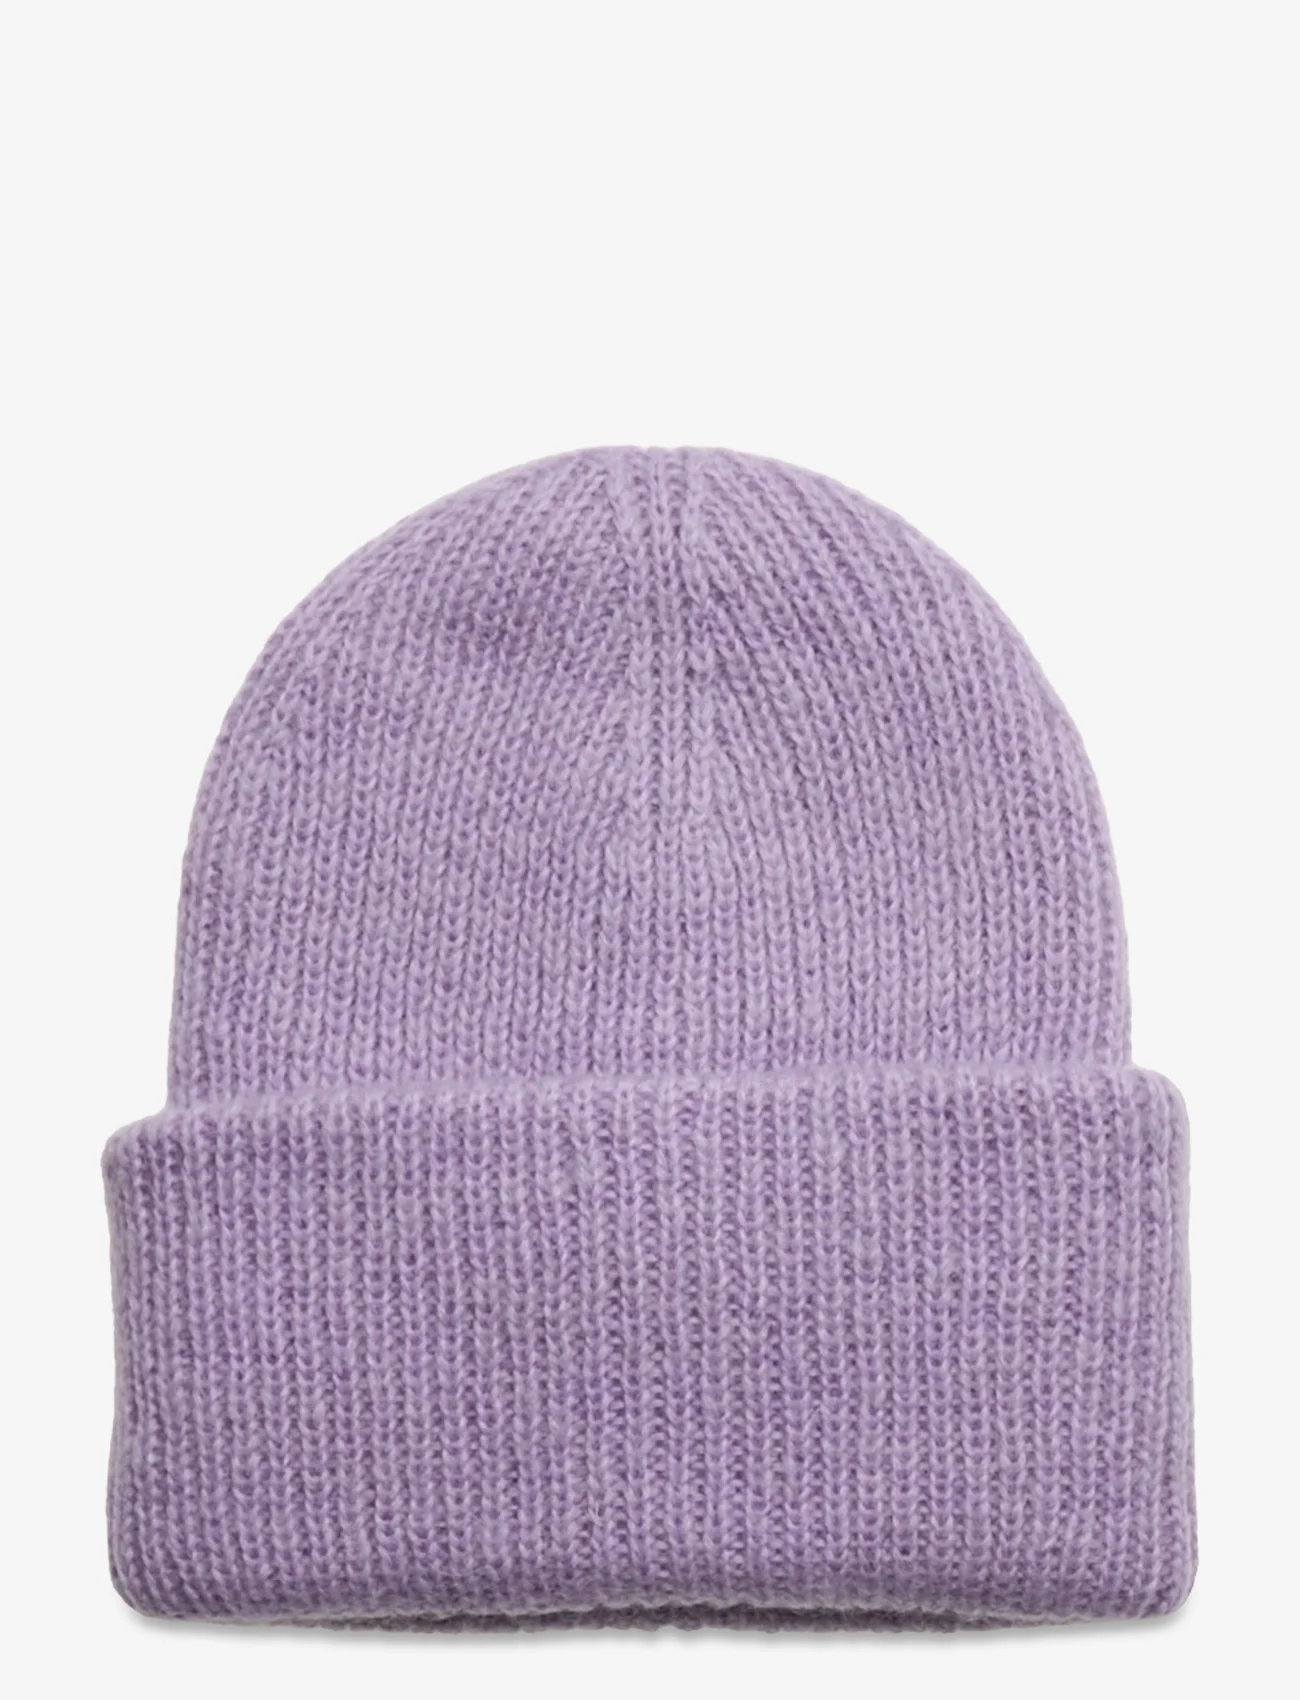 Reima - Beanie, Pilvinen - winter hats - lilac amethyst - 1